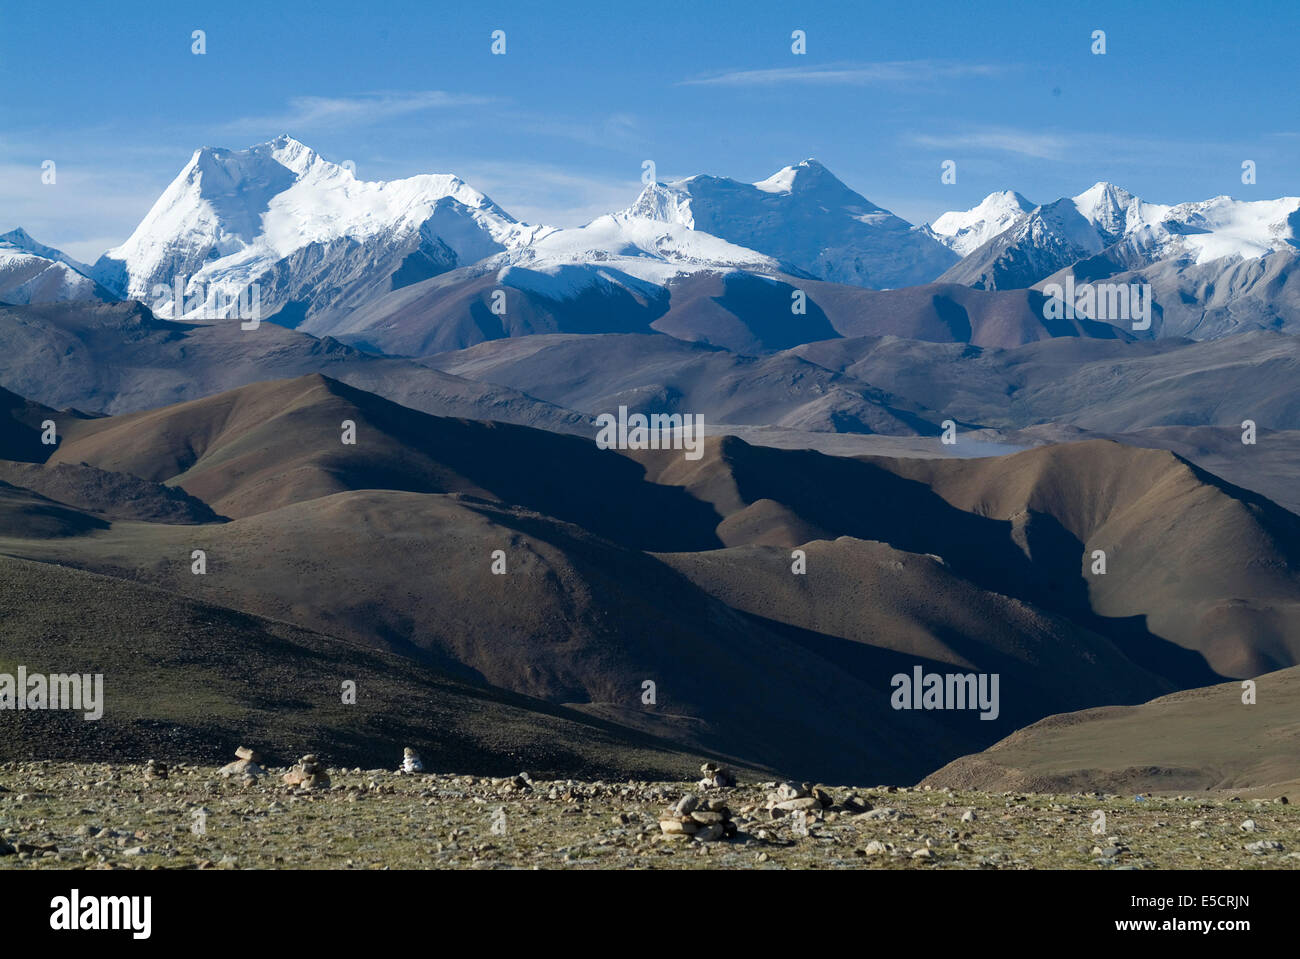 View of Himalaya range (the world's tallest mountains), Tibet, China Stock Photo